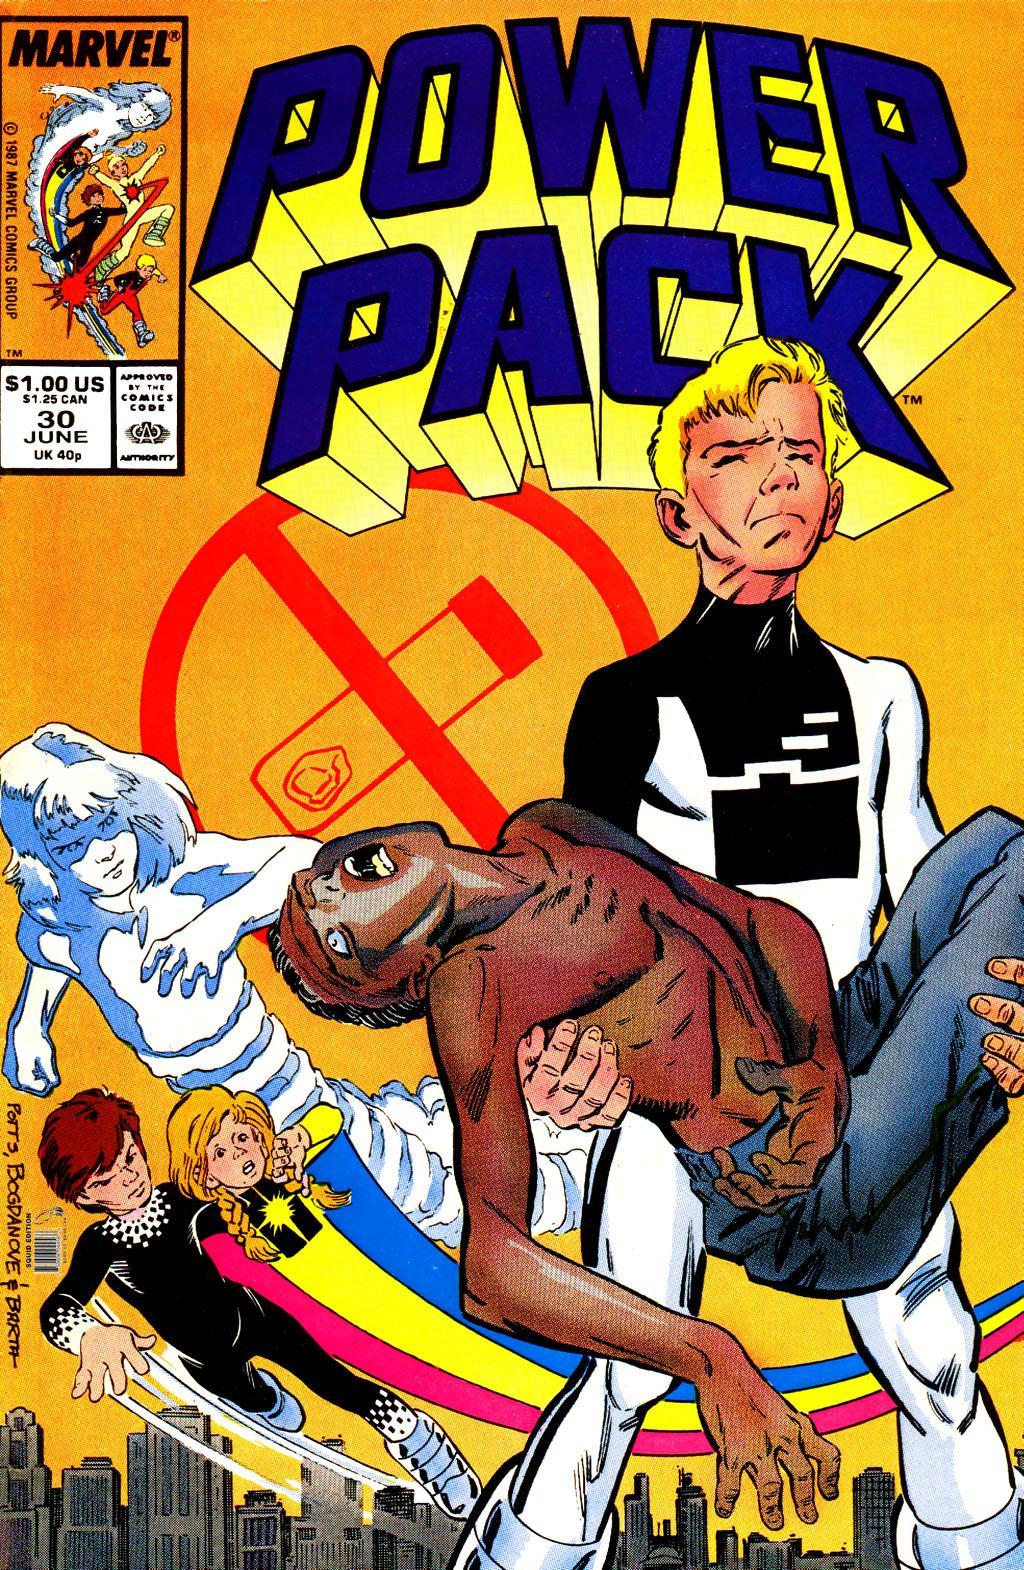 Power packing комиксы. Power Pack комикс. Комикс w. Эллиот Франклин Марвел. Power Pack Marvel Vintage.